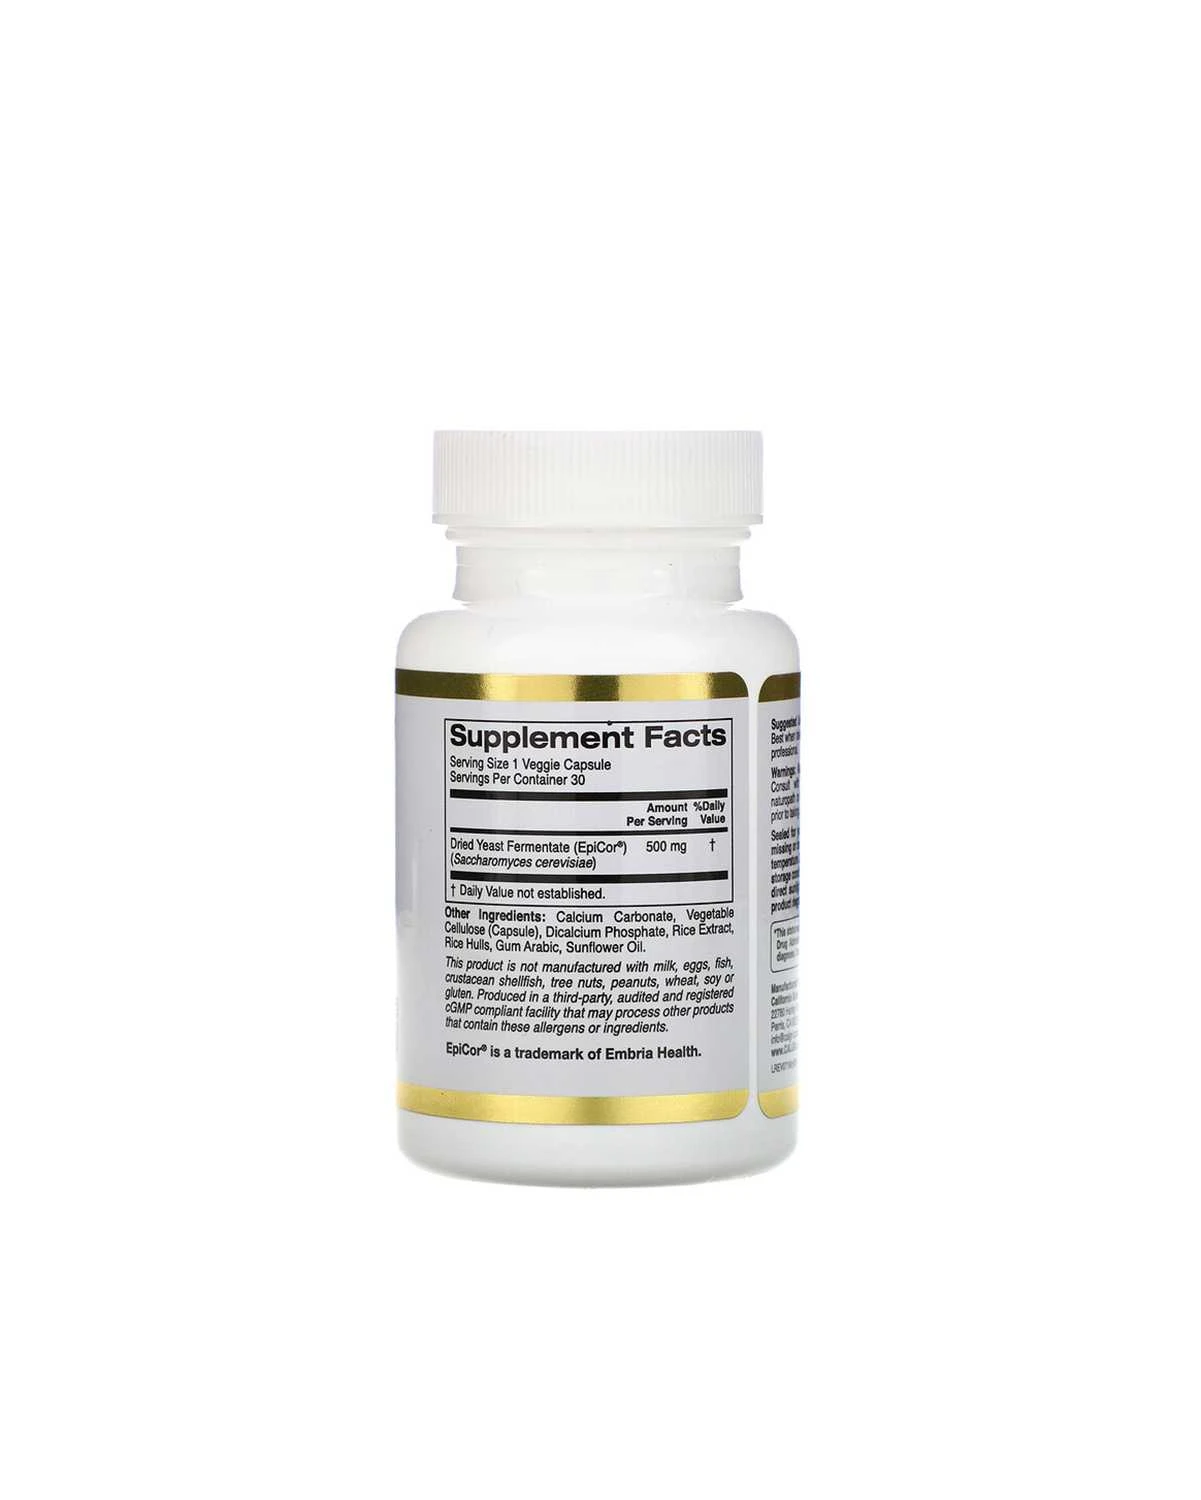 Эпикор 500 мг | 30 кап California Gold Nutrition